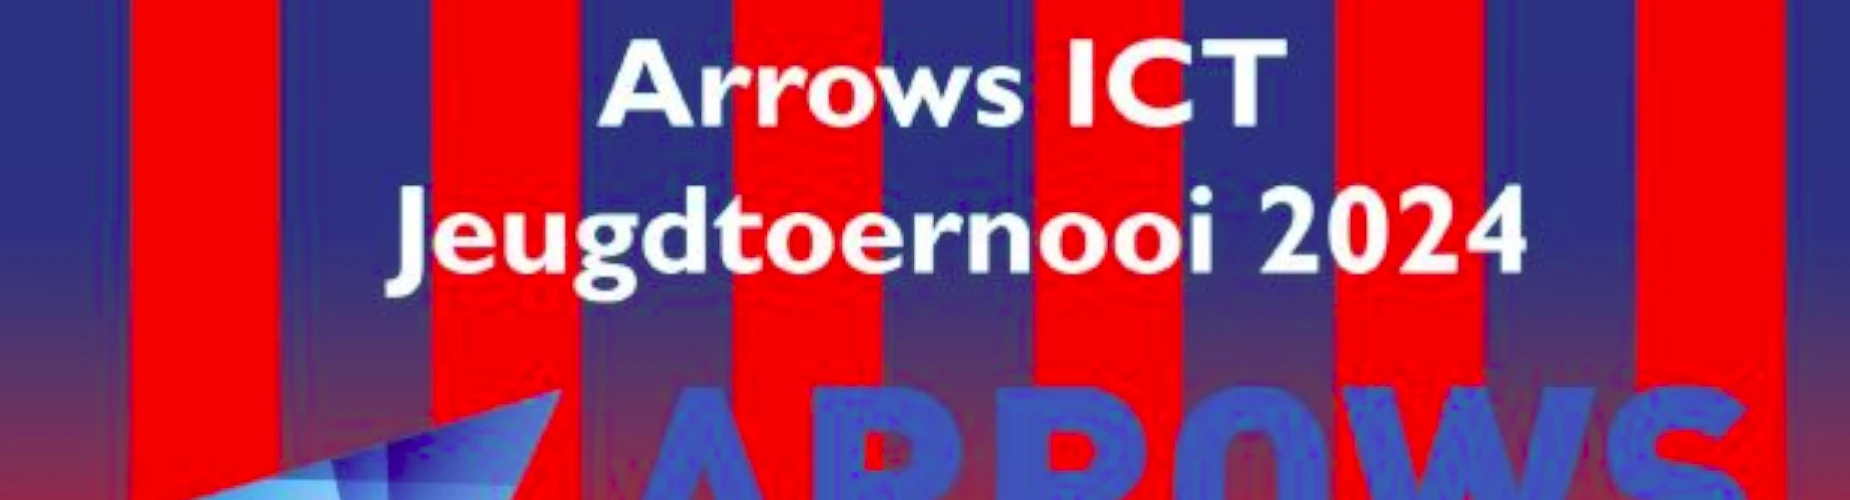 Banner - JO17 - Arrows ICT Jeugdtoernooi 2024 - RKVB - Baexem